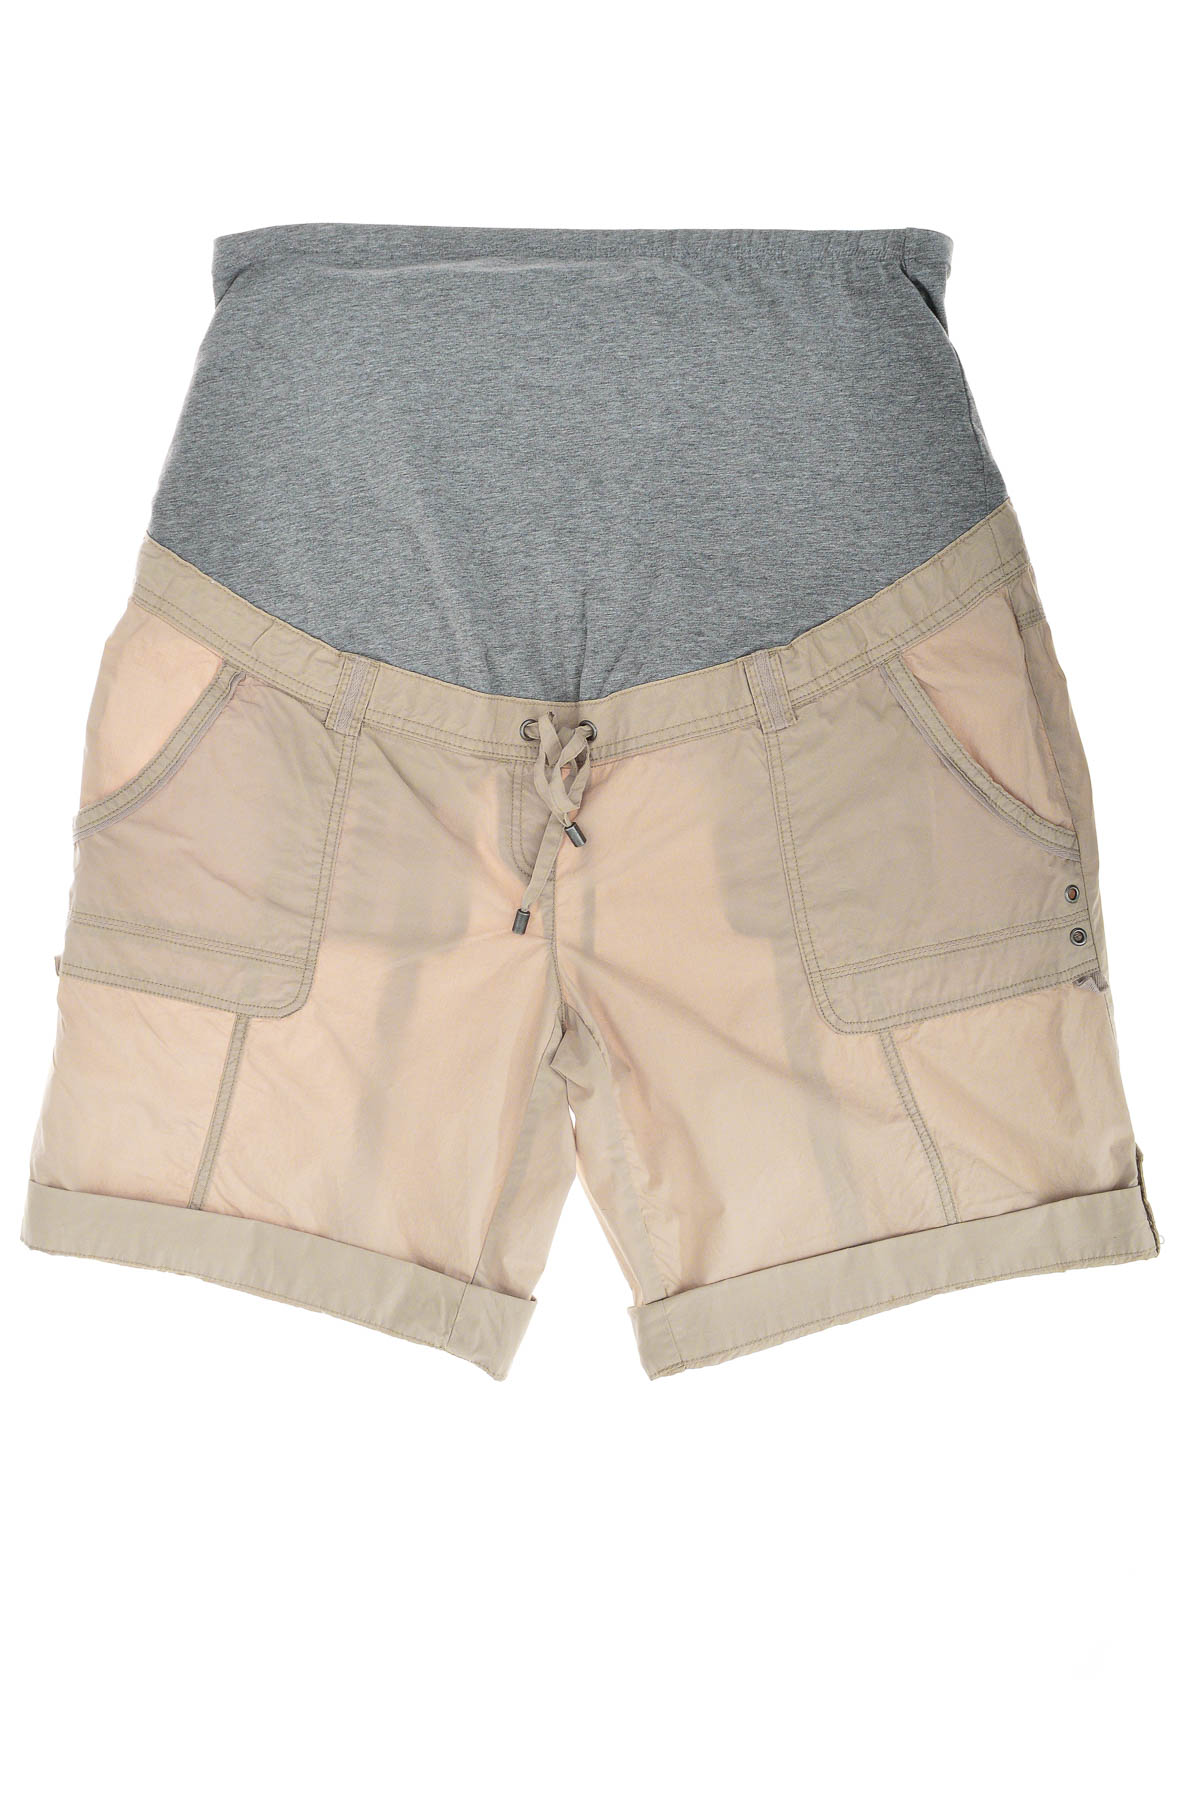 Female shorts for pregnant women - Yessica - 0